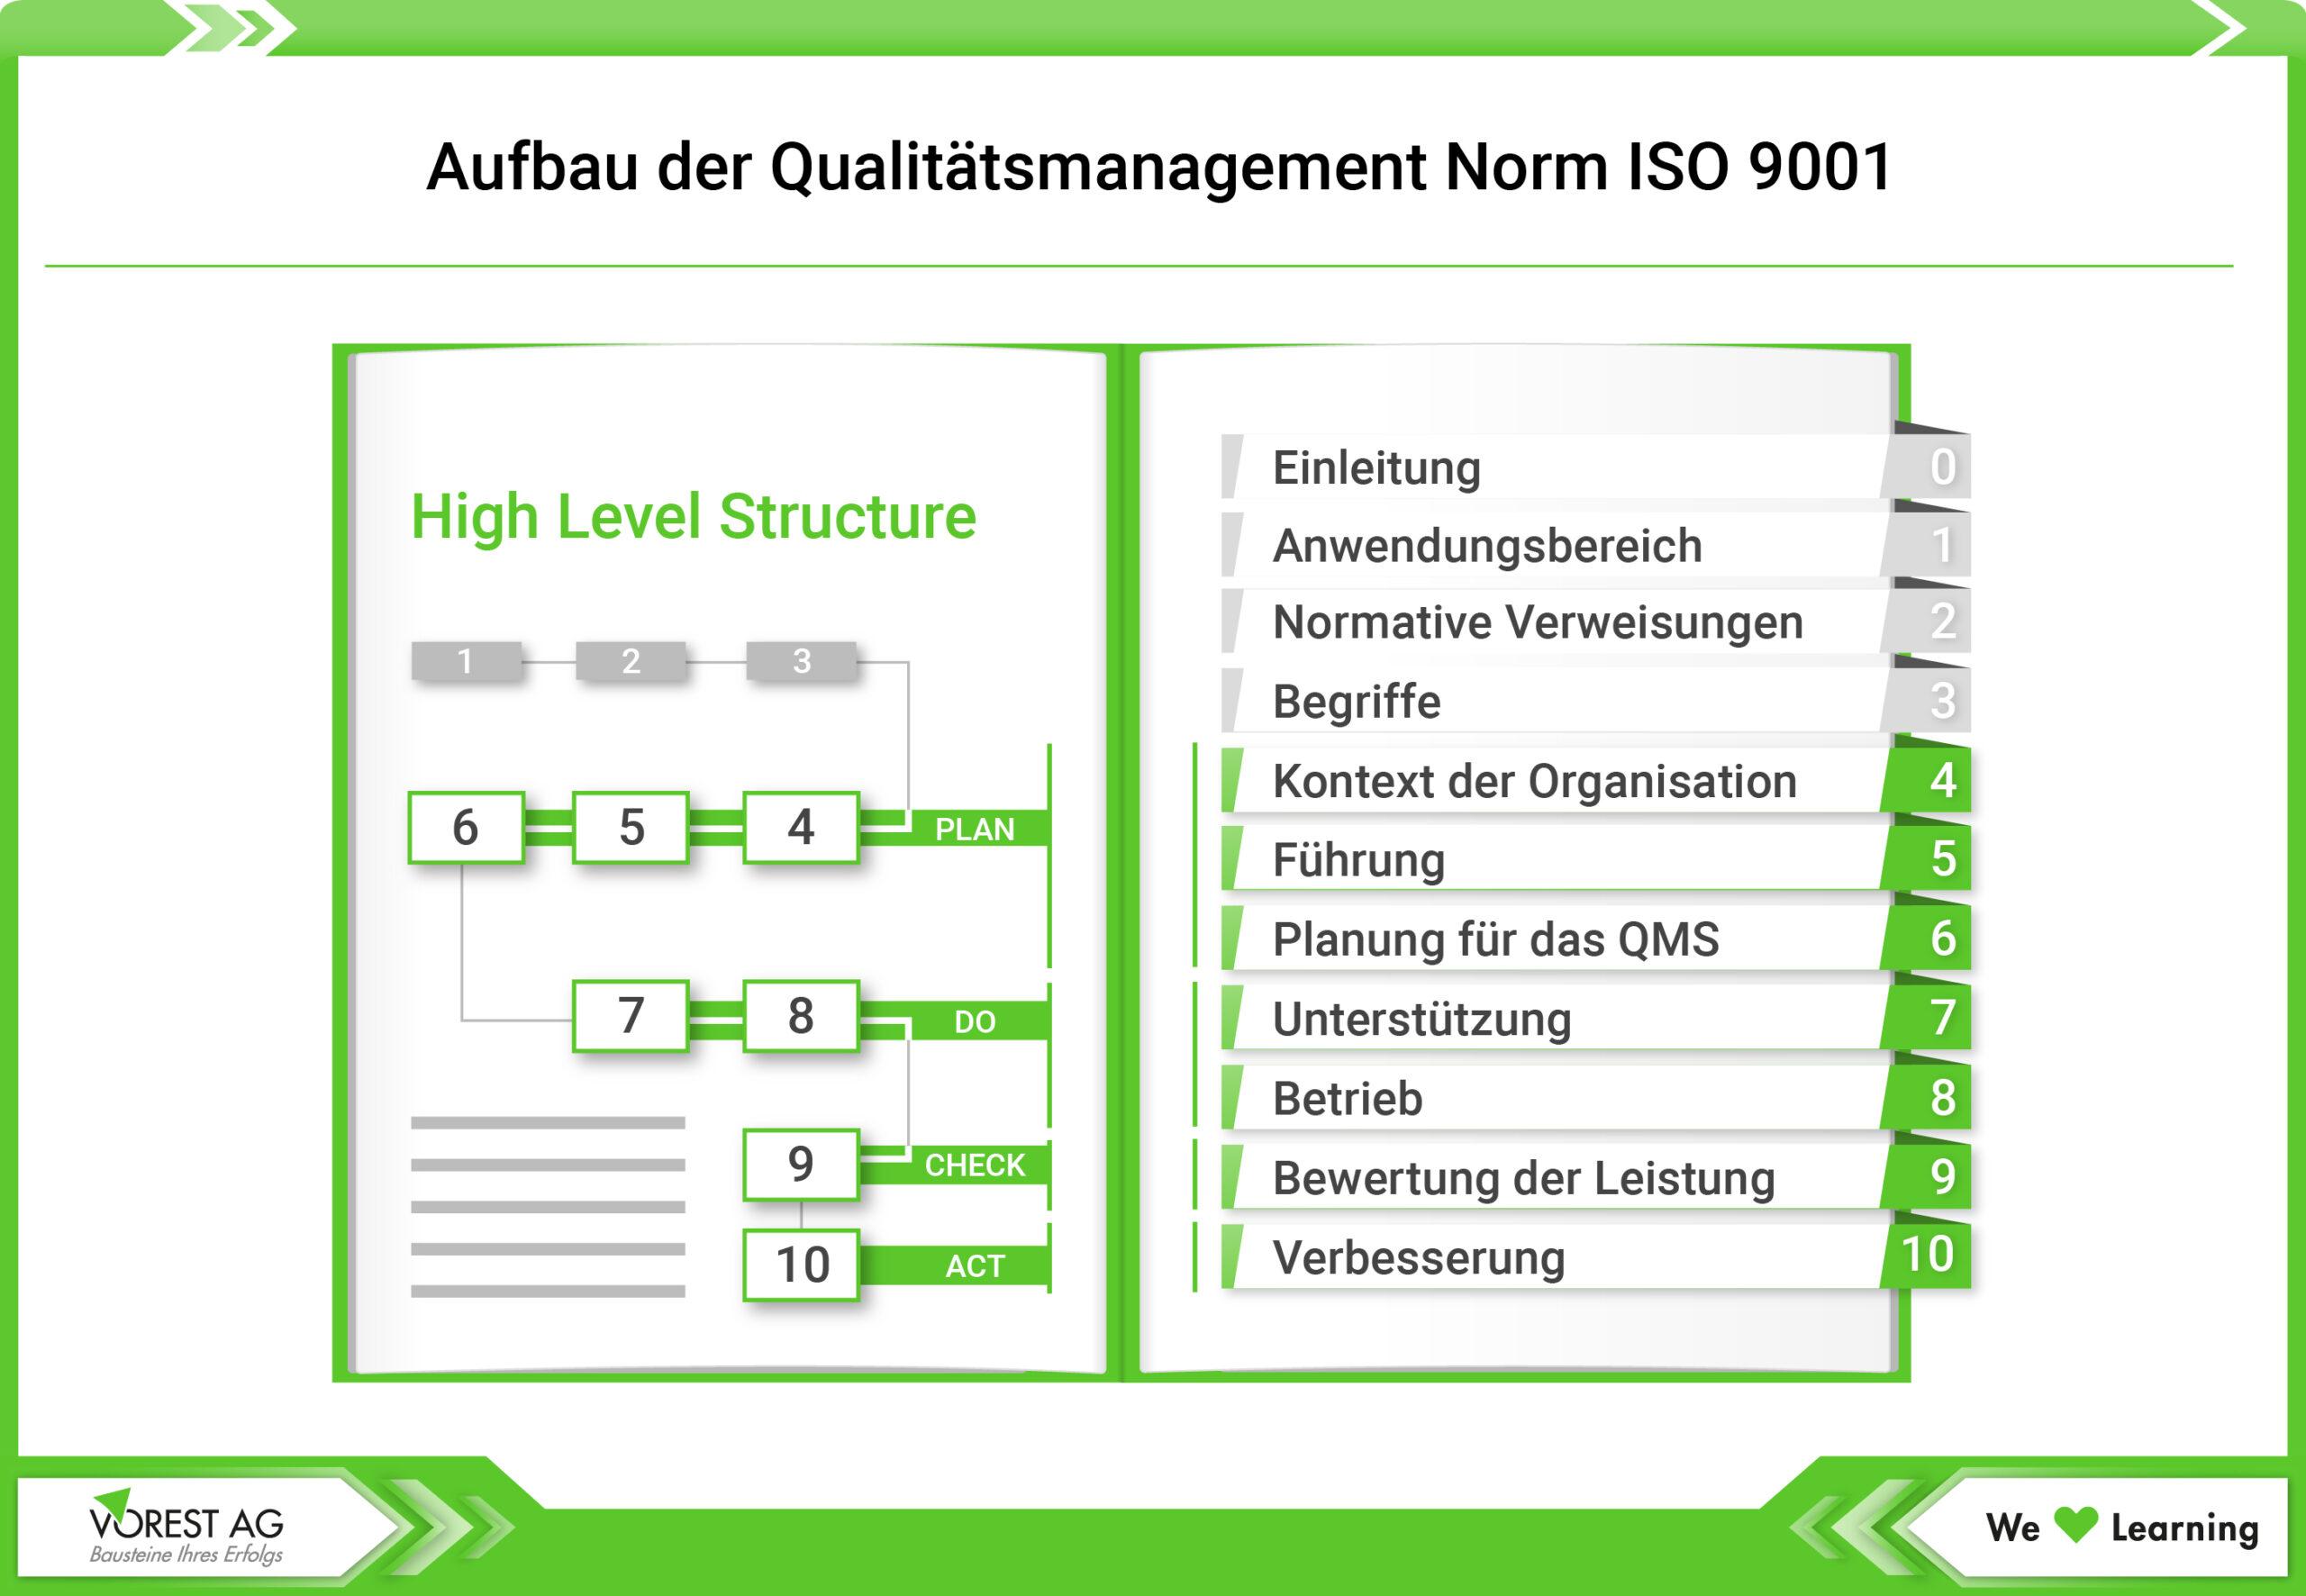 Qualitätsmanagement-Norm ISO 9001 - Aufbau